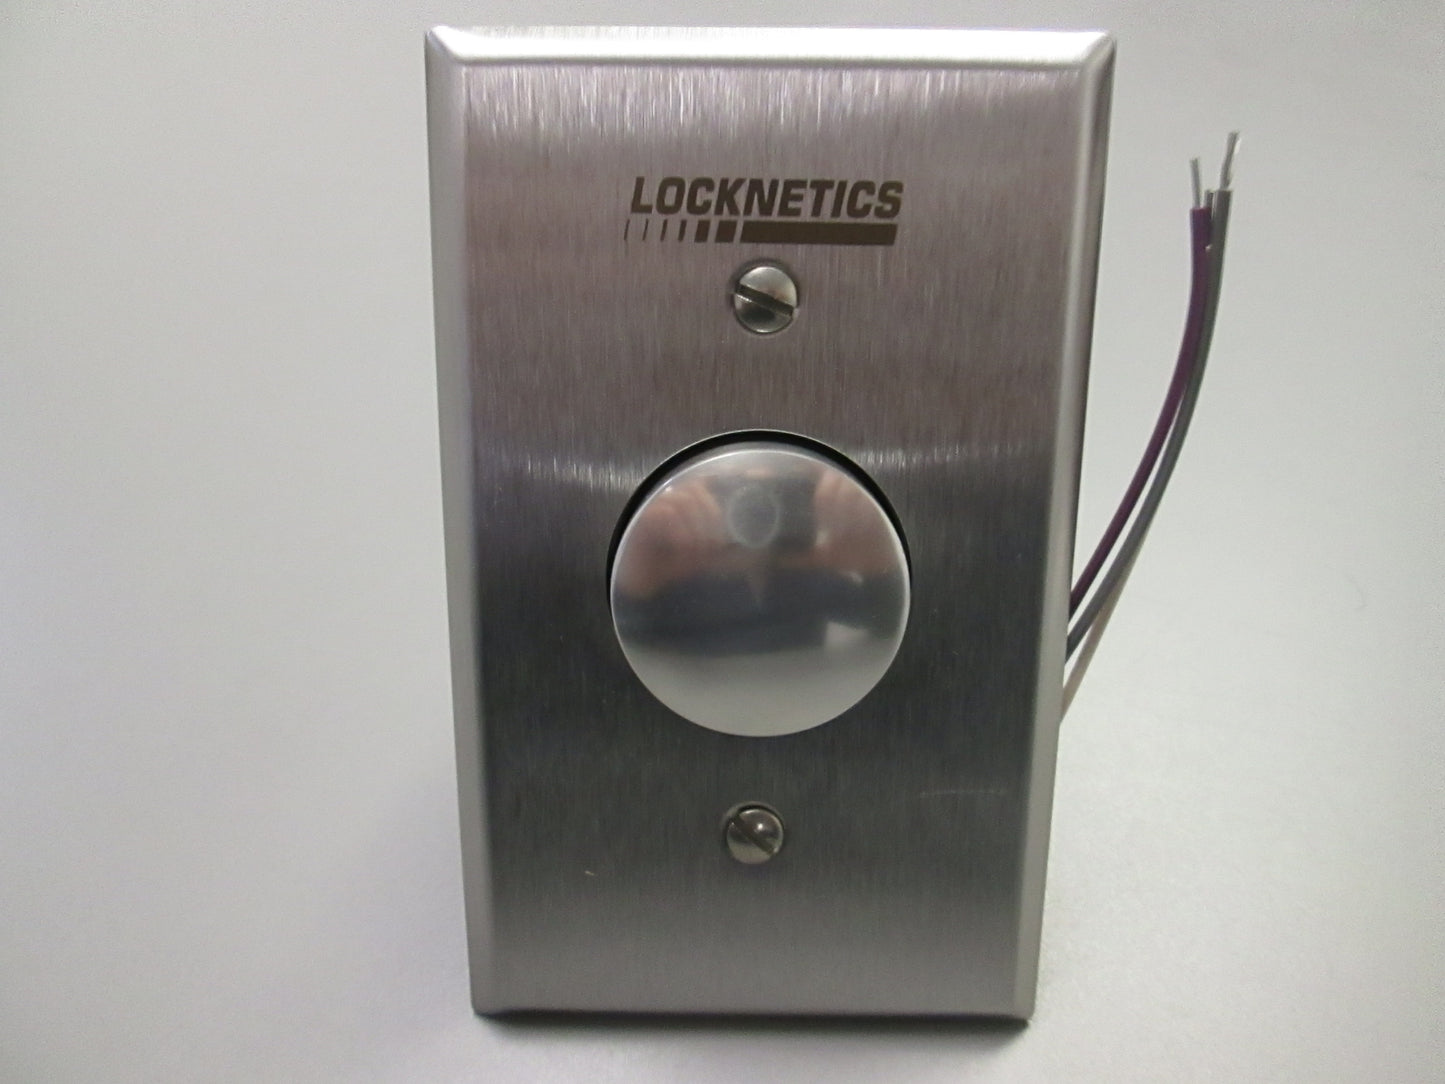 Locknetics 601 AL Heavy Duty Push Button to Egress Electronically Locked Doors Wide Plate